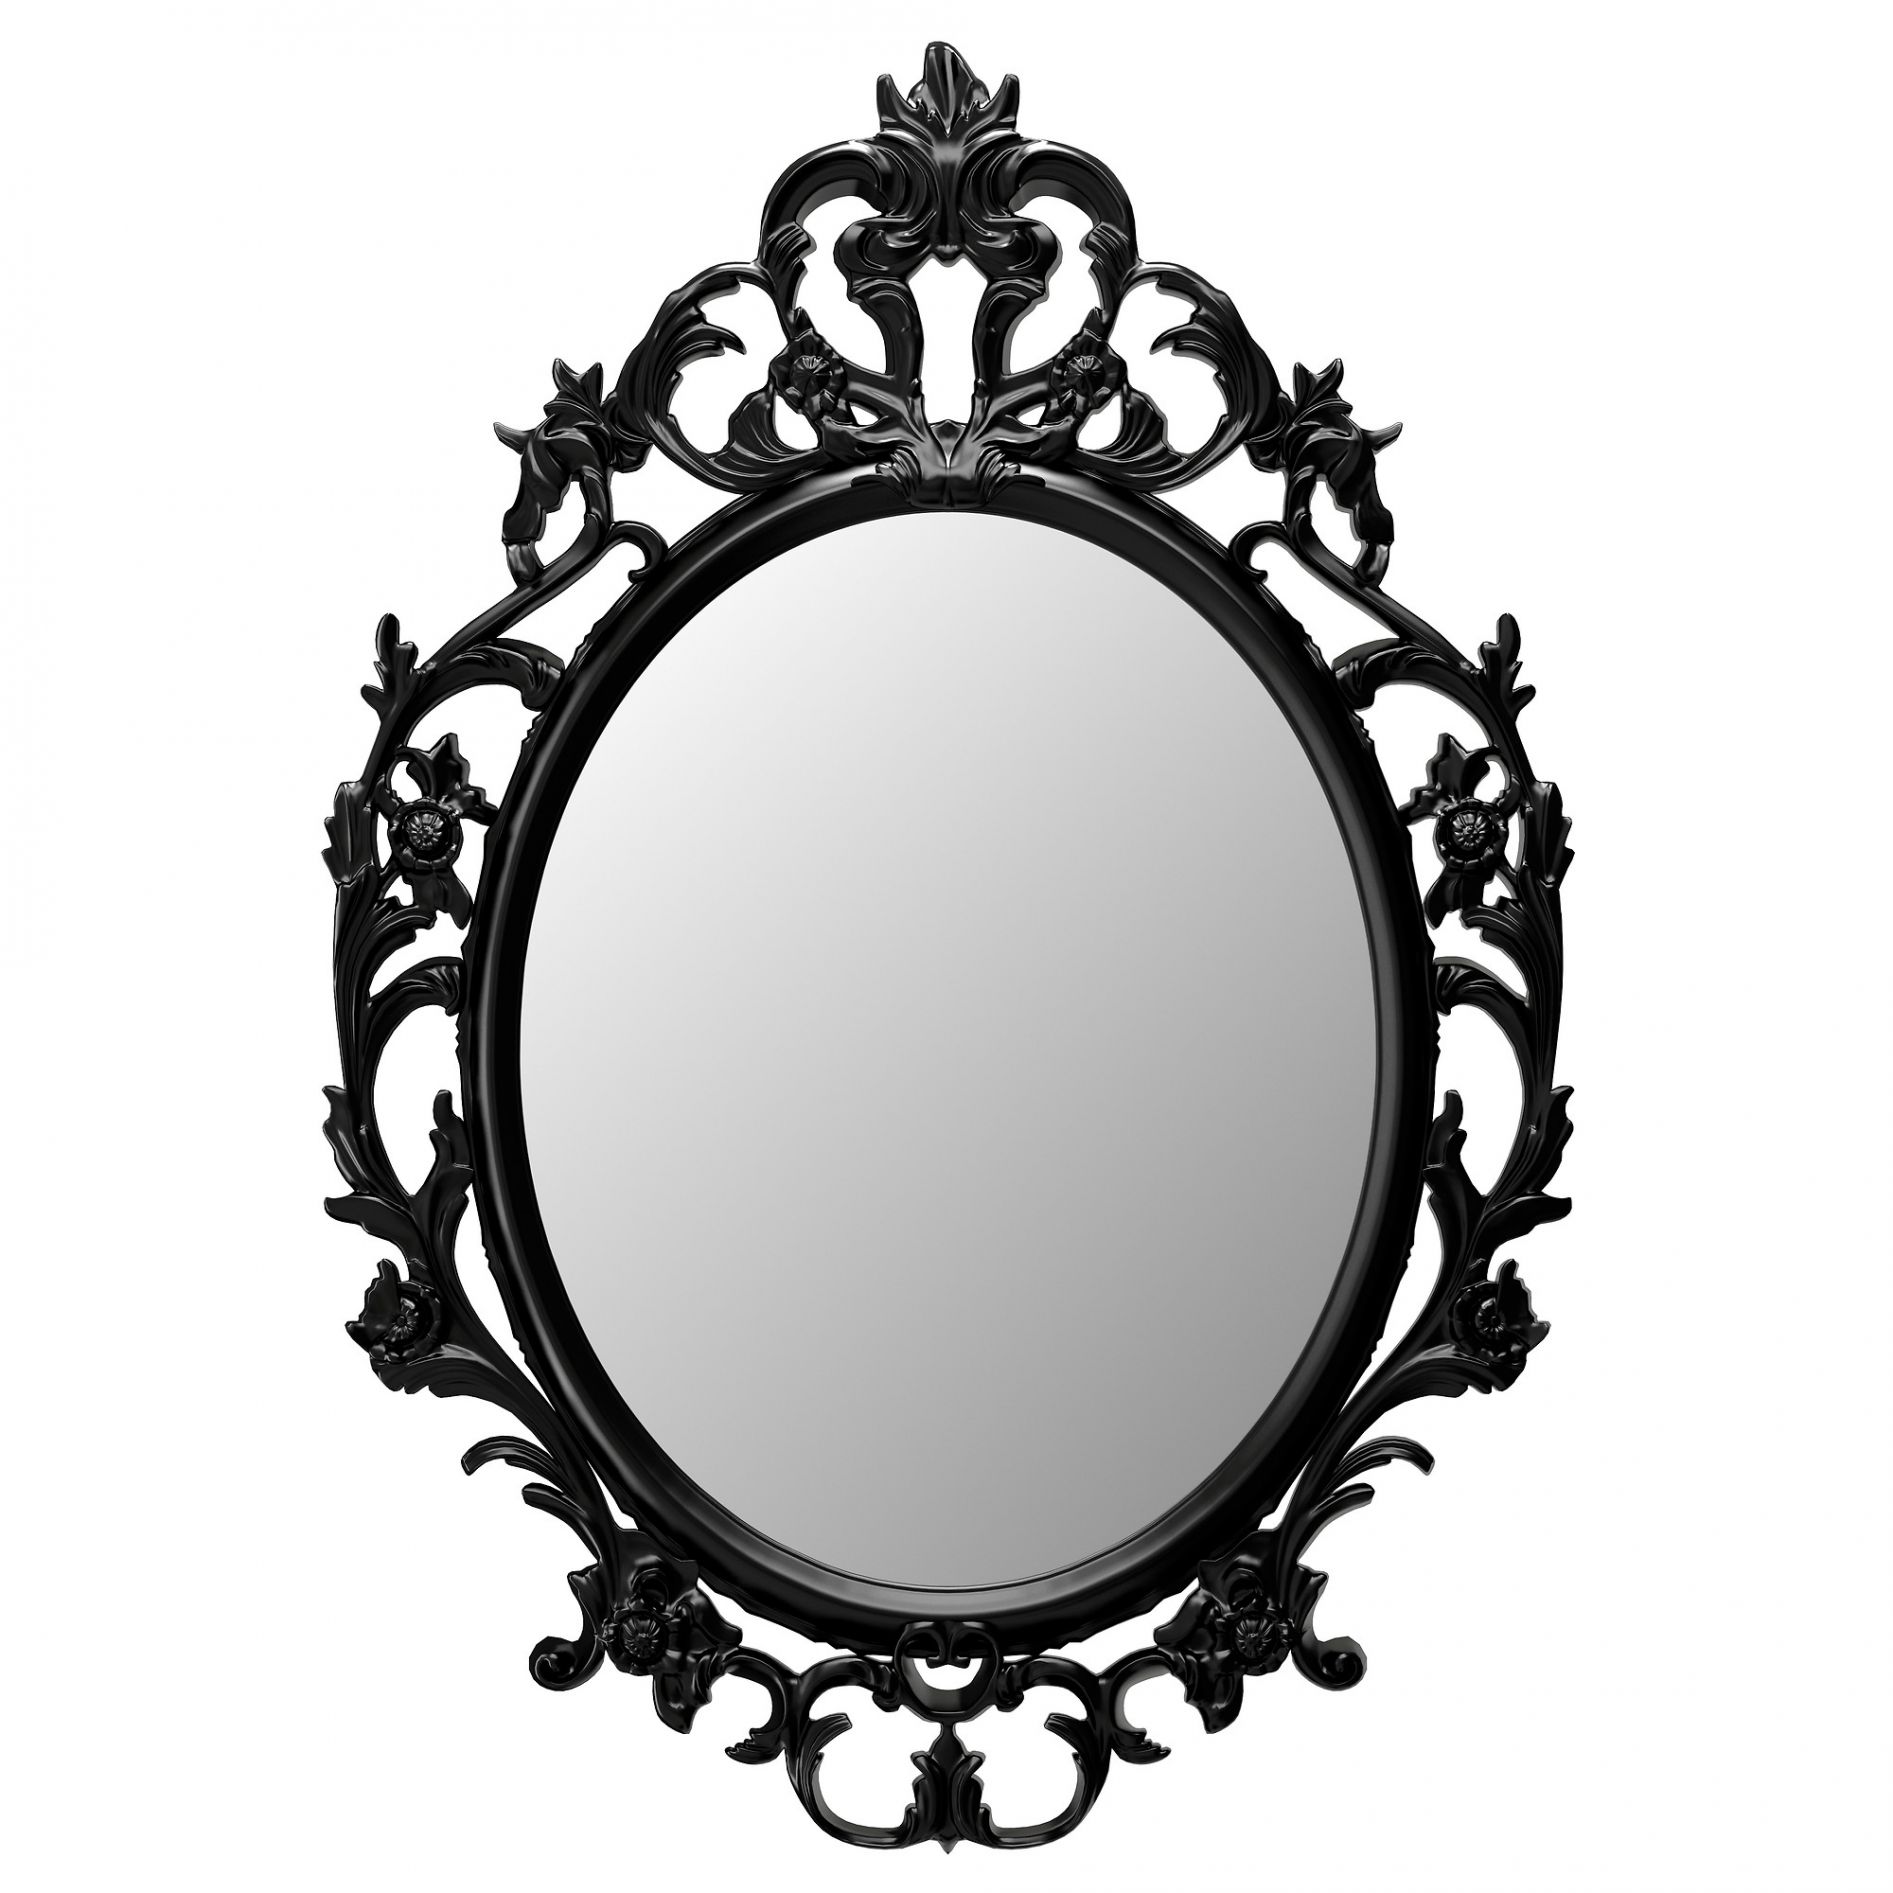 High Quality mirror mirror Blank Meme Template